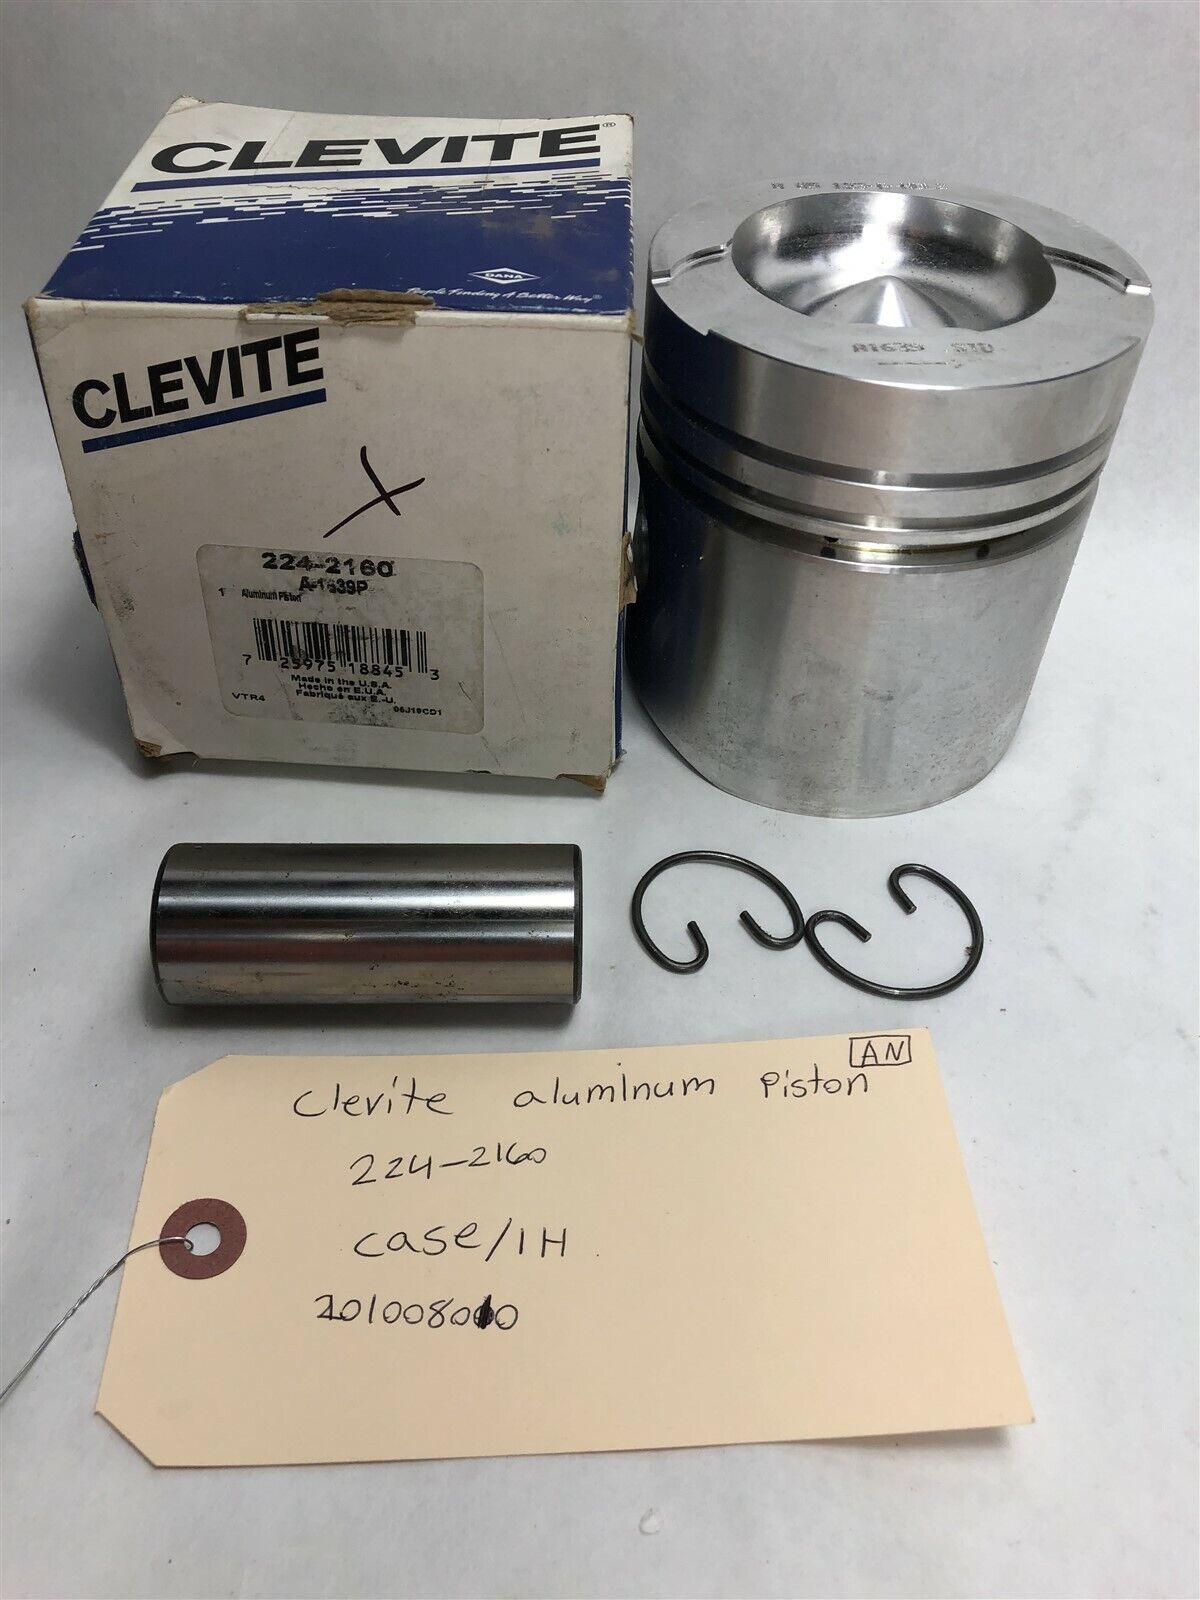 Genuine Clevite Piston Kit STD 224-2160 CASE G-207D 350 480 580 310 350 450 500